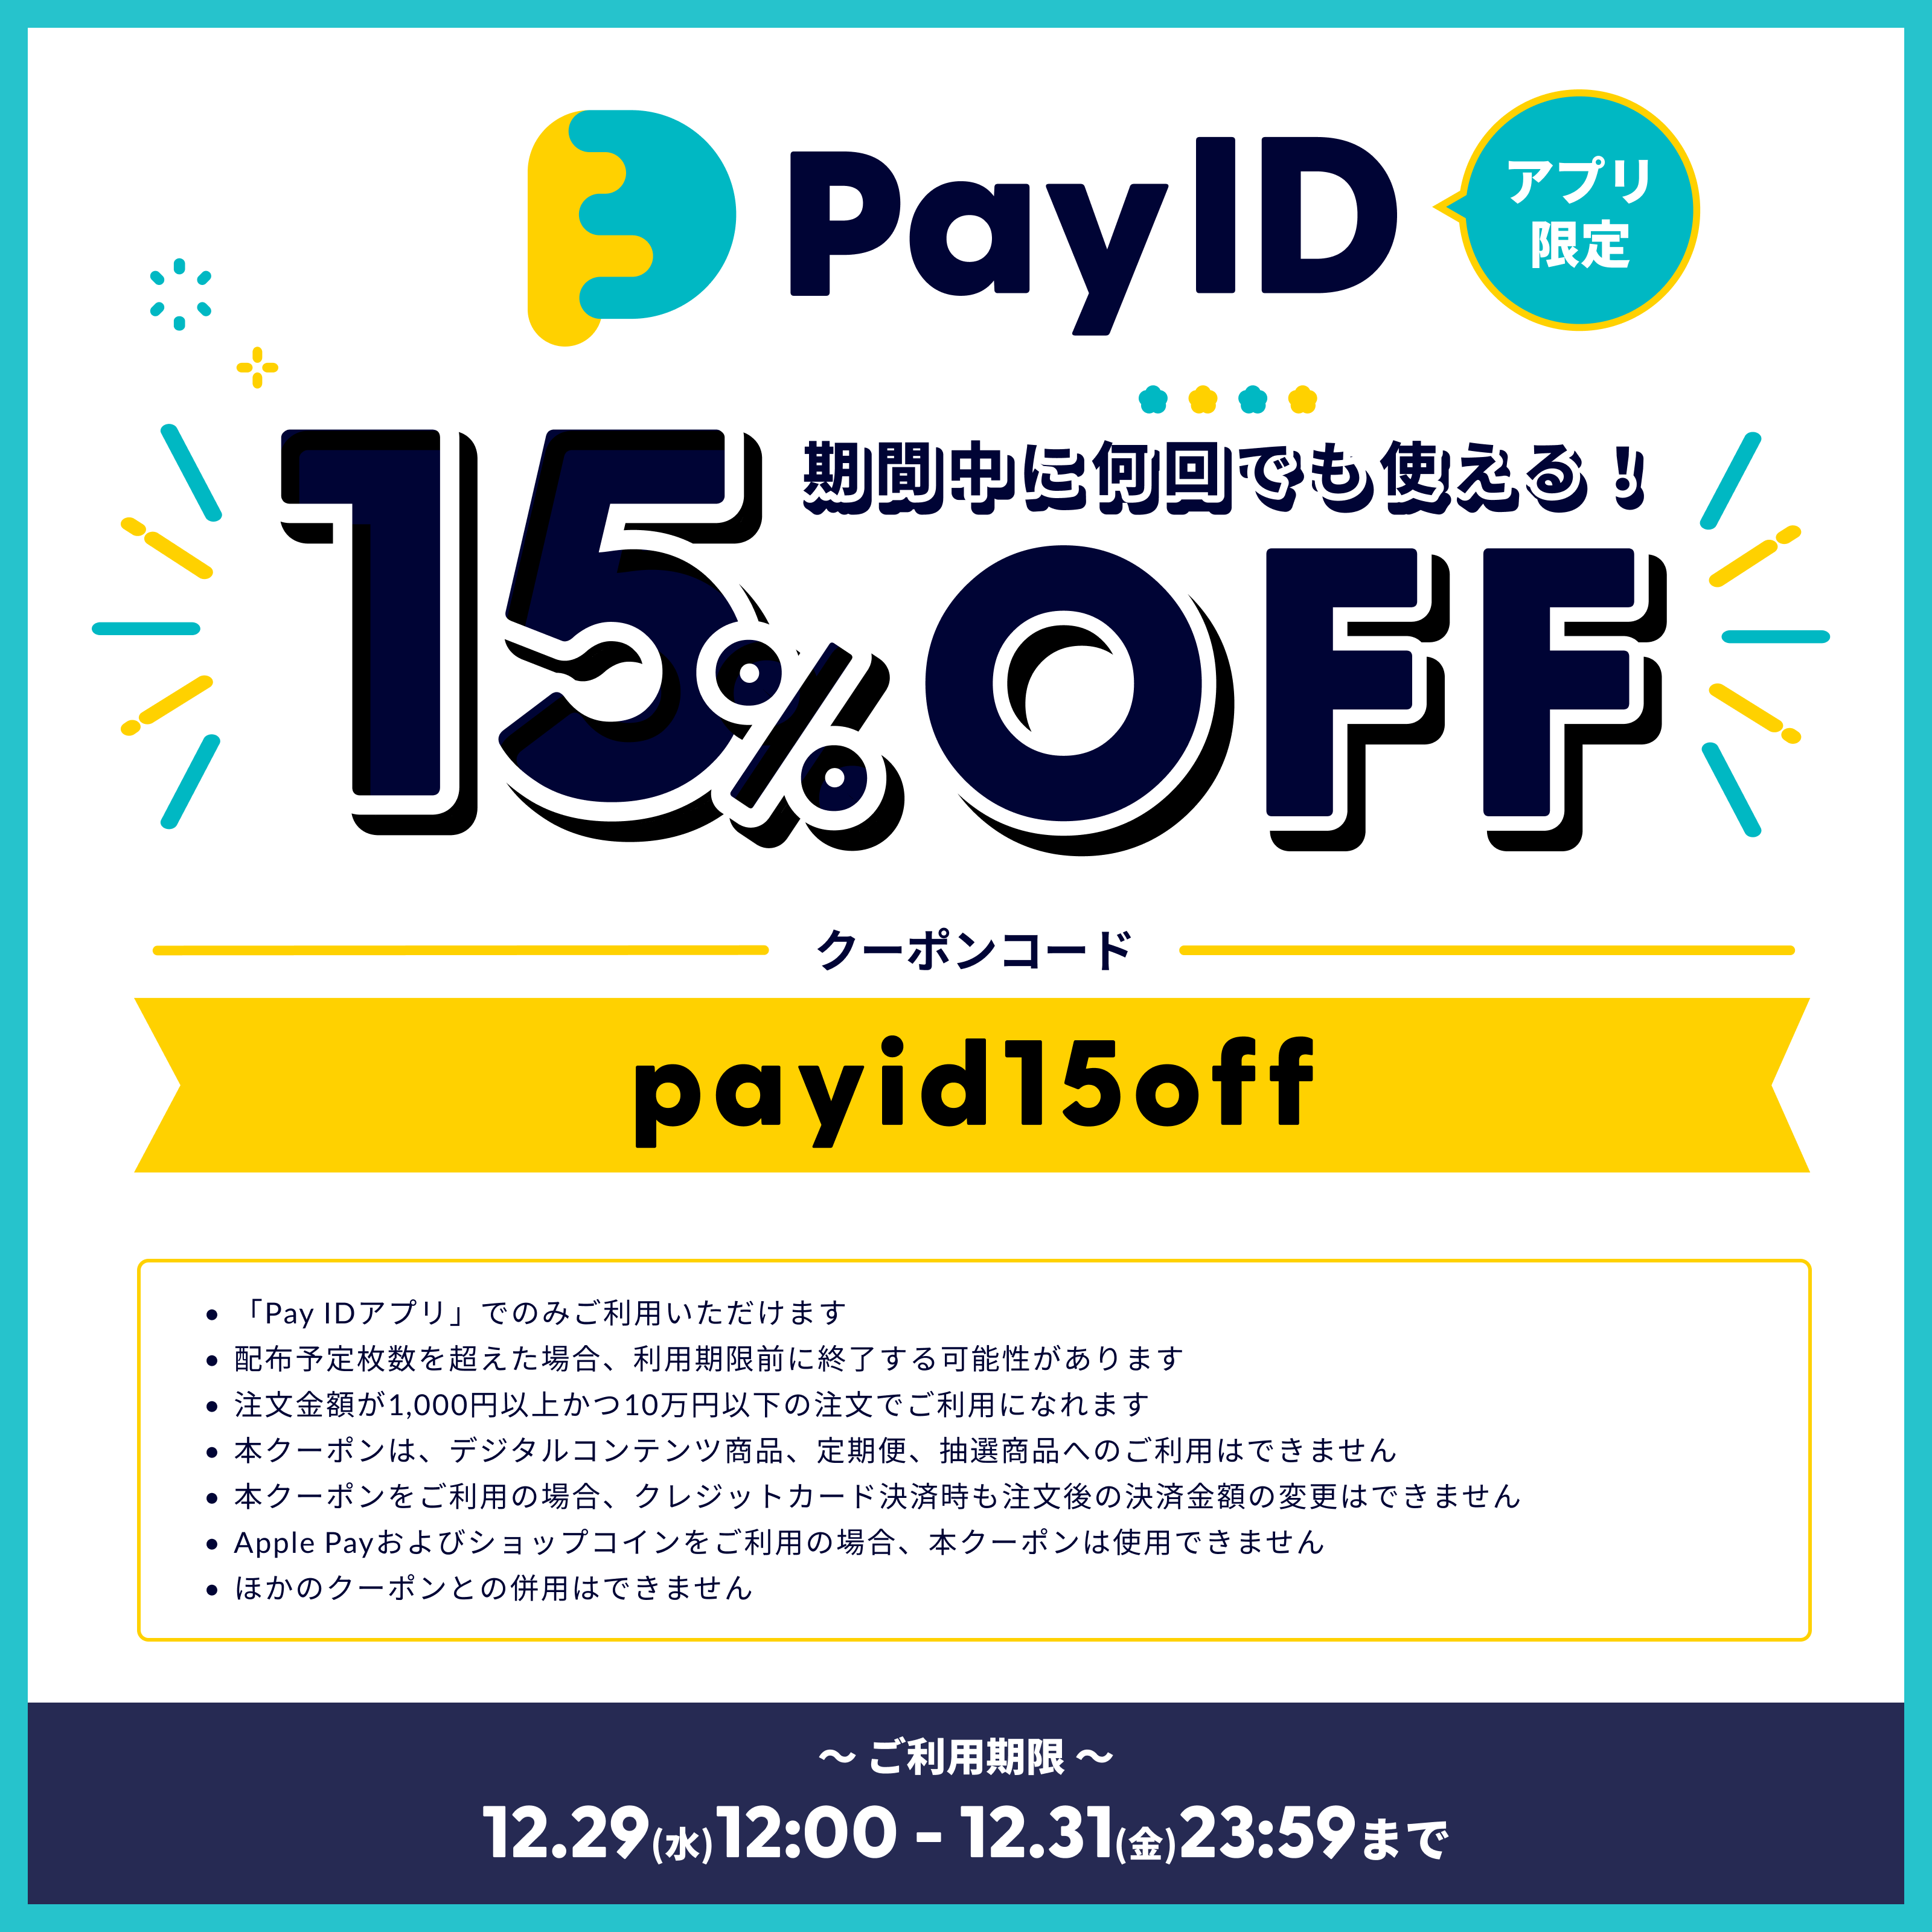 「Pay IDアプリ」限定15%OFFクーポン配布中です。